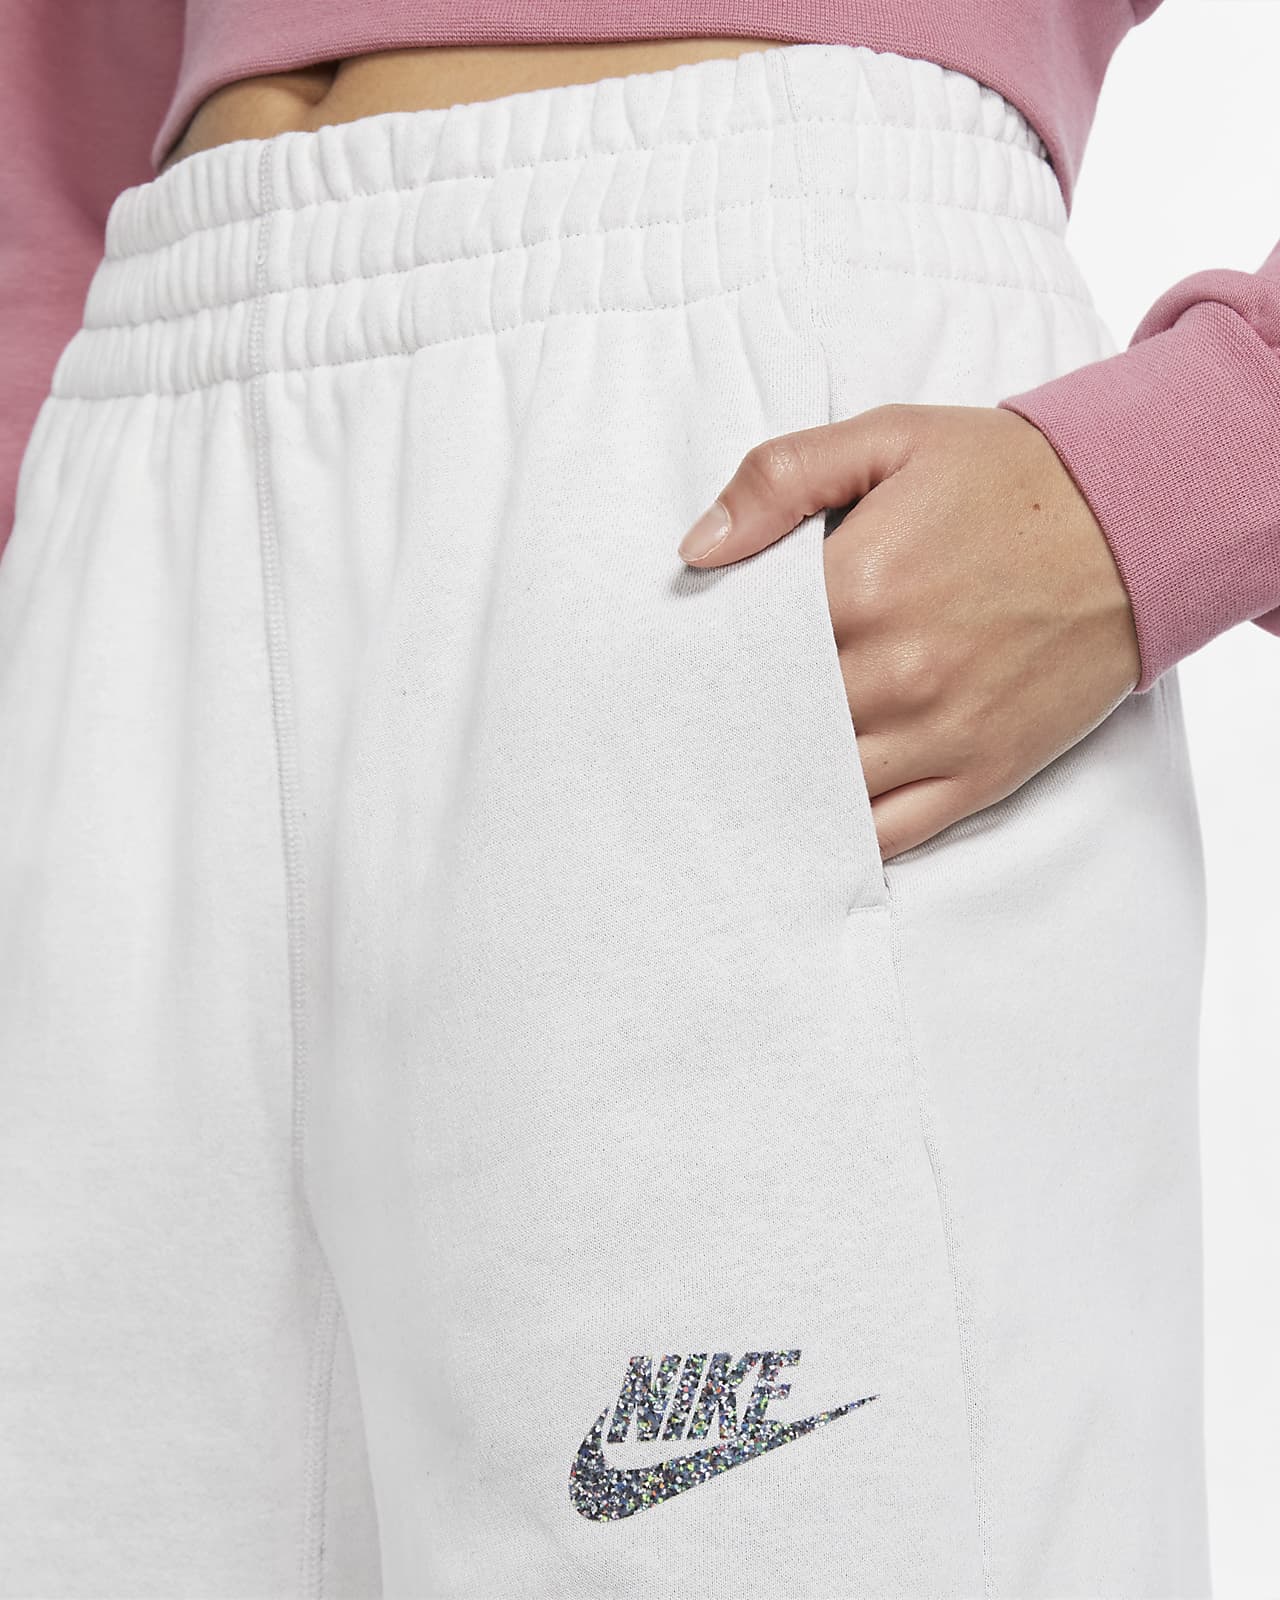 nike sportswear women's ribbed shorts